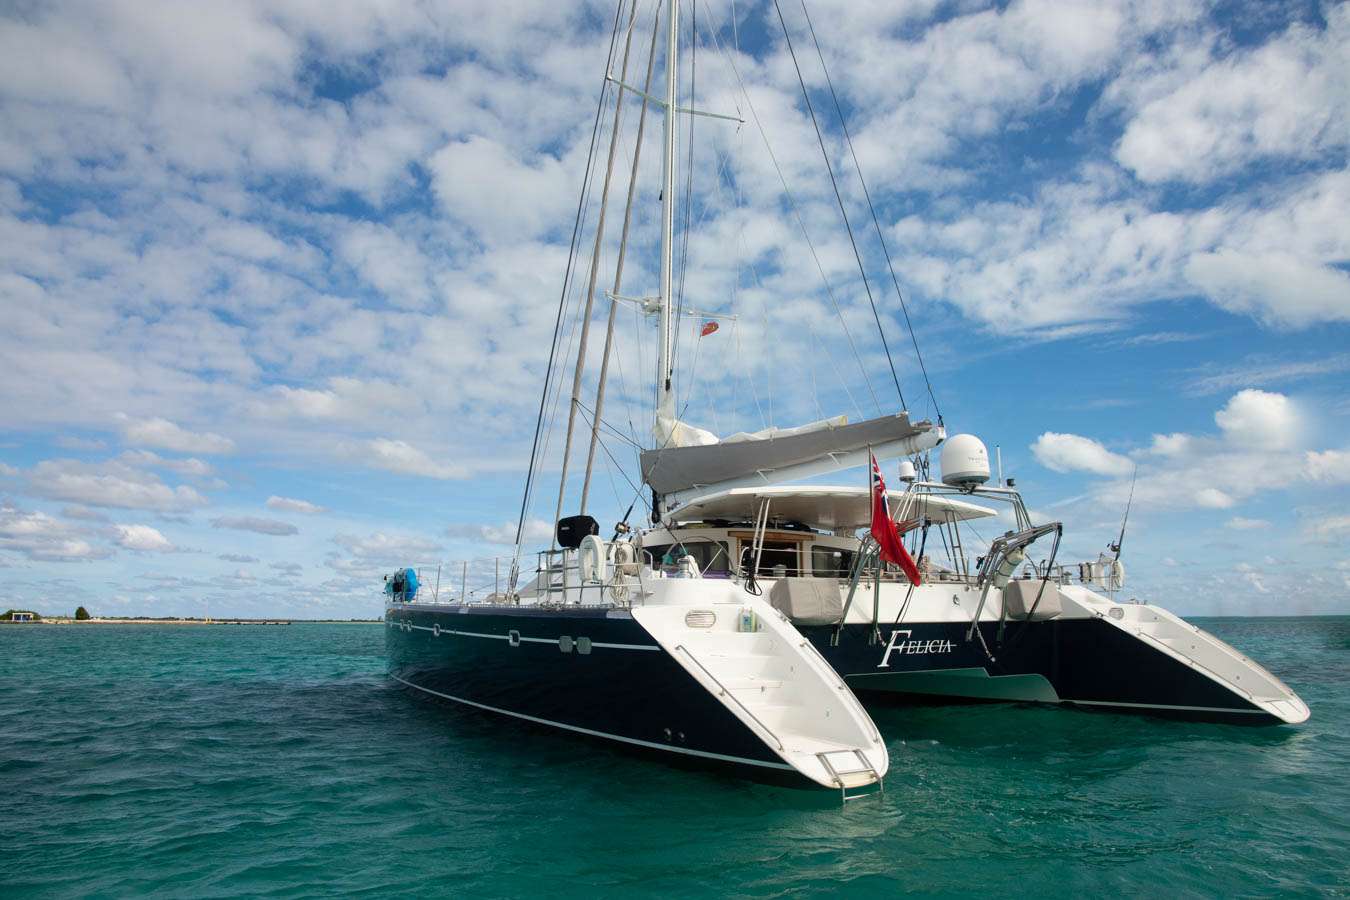 Catamaran Felicia in the Caribbean